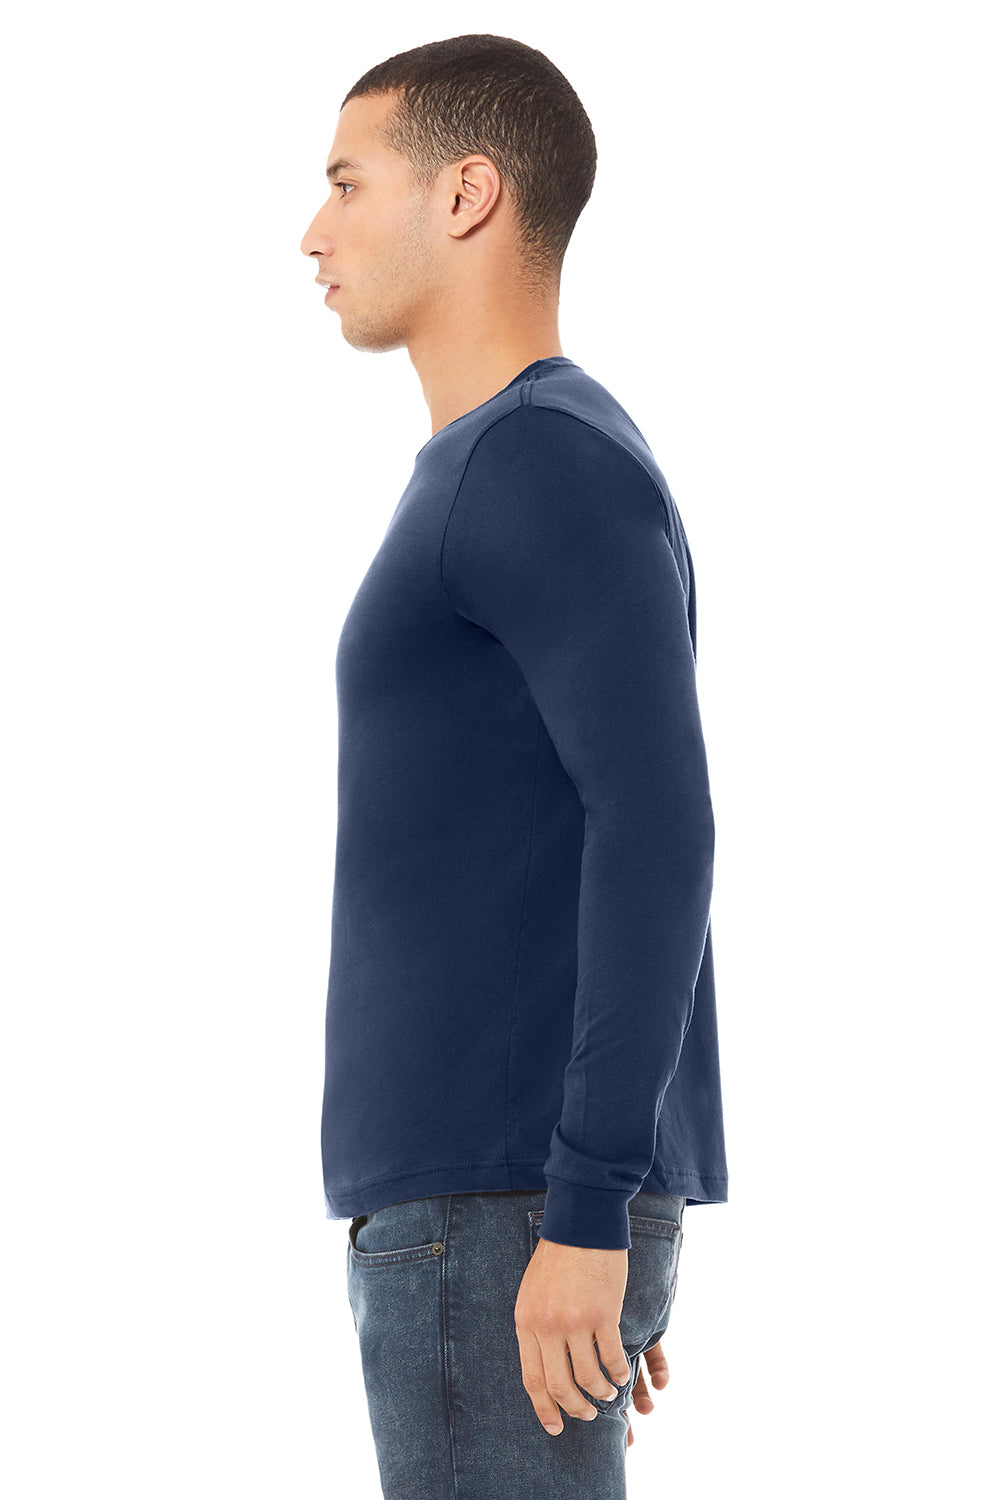 Bella + Canvas BC3501/3501 Mens Jersey Long Sleeve Crewneck T-Shirt Navy Blue Model Side